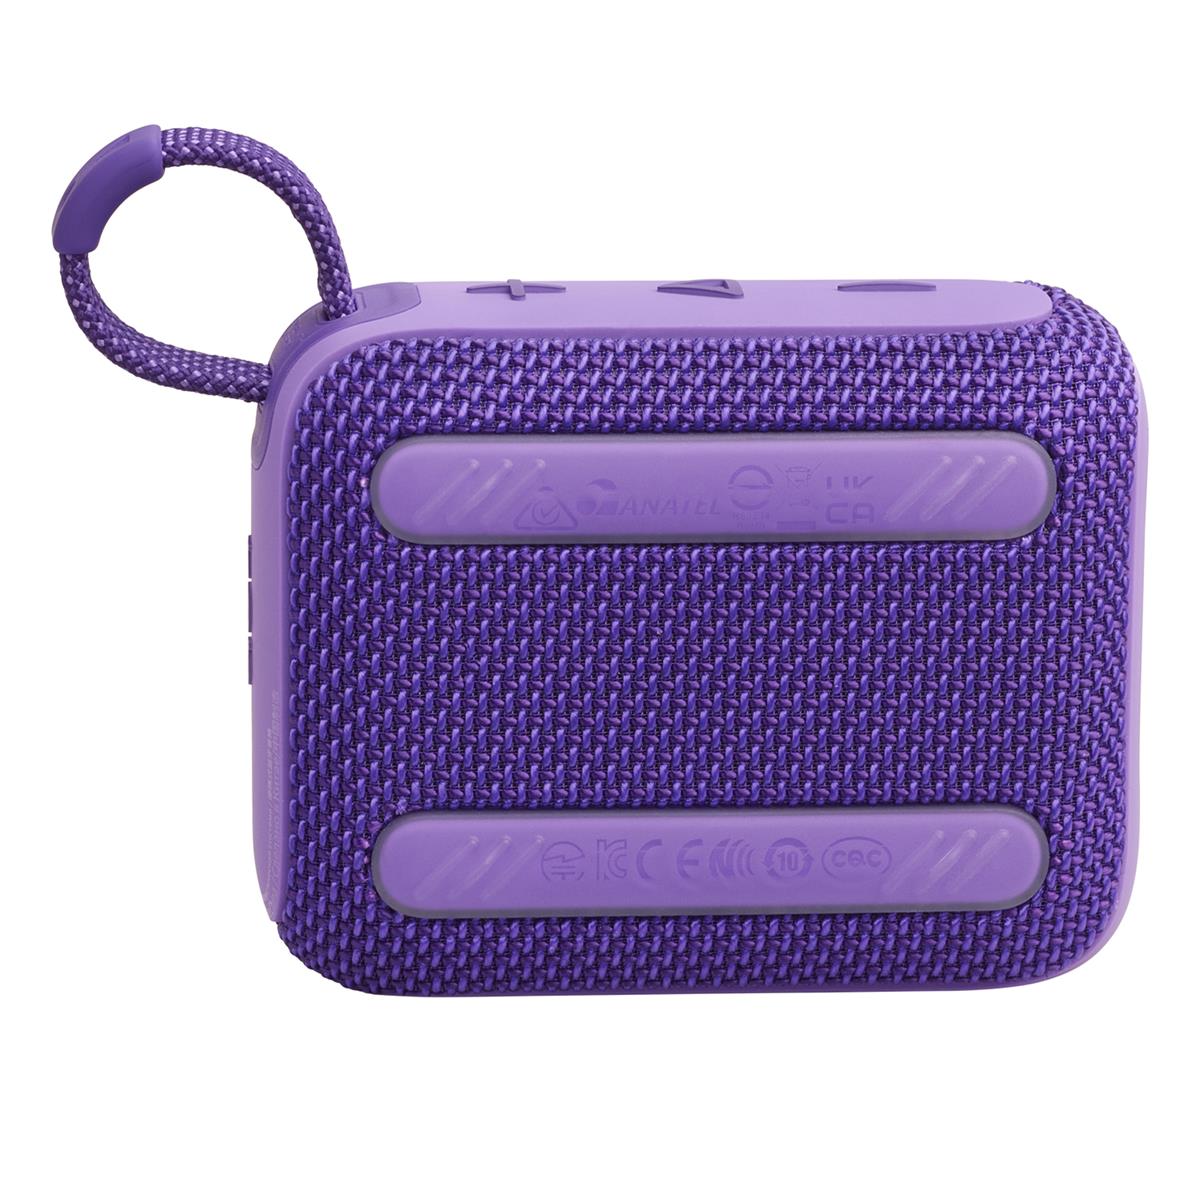 JBL Go 4 Portable Waterproof Bluetooth Speaker (Purple)